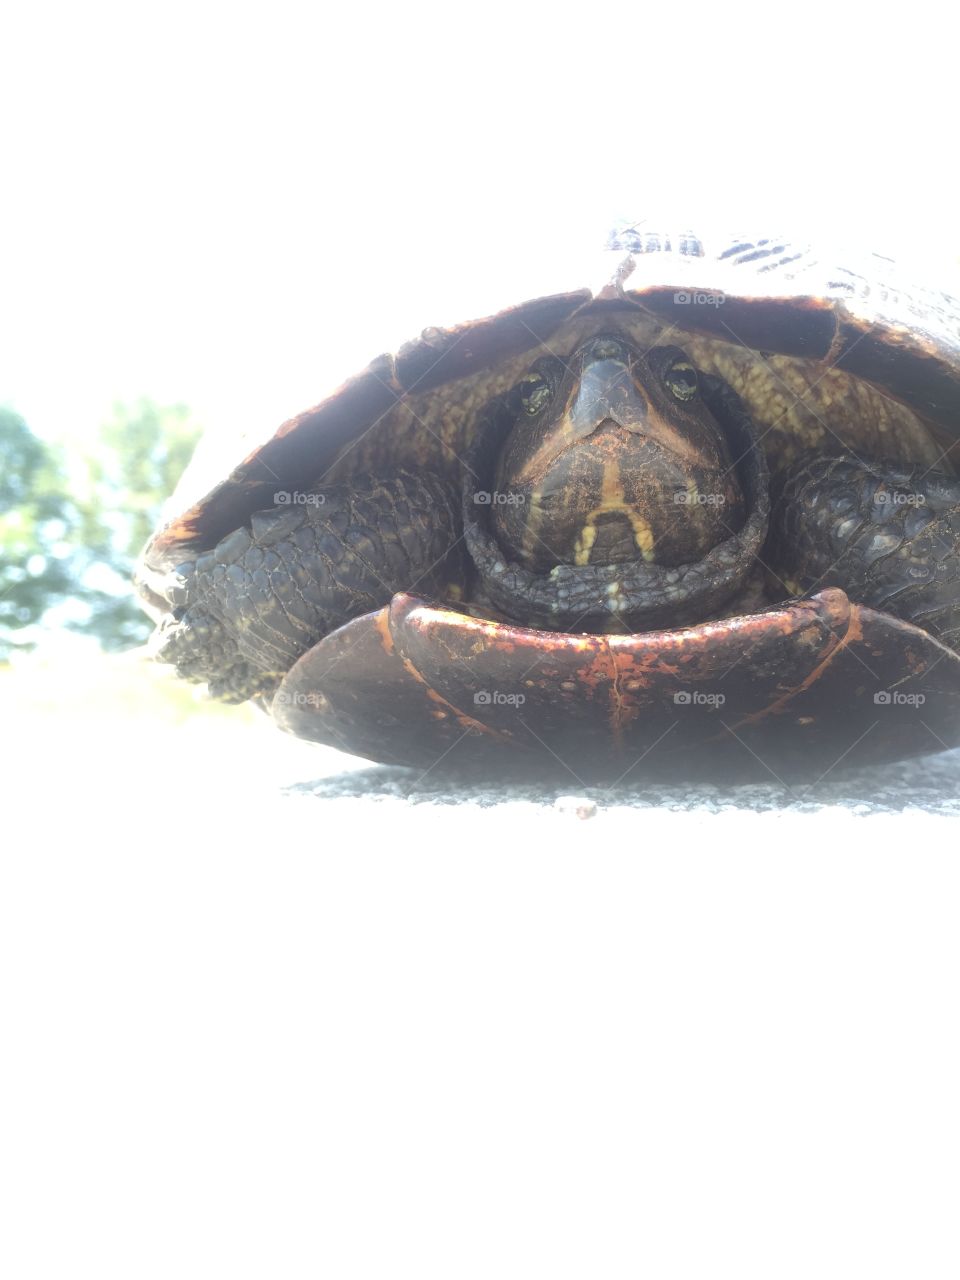 Turtle closeup. 